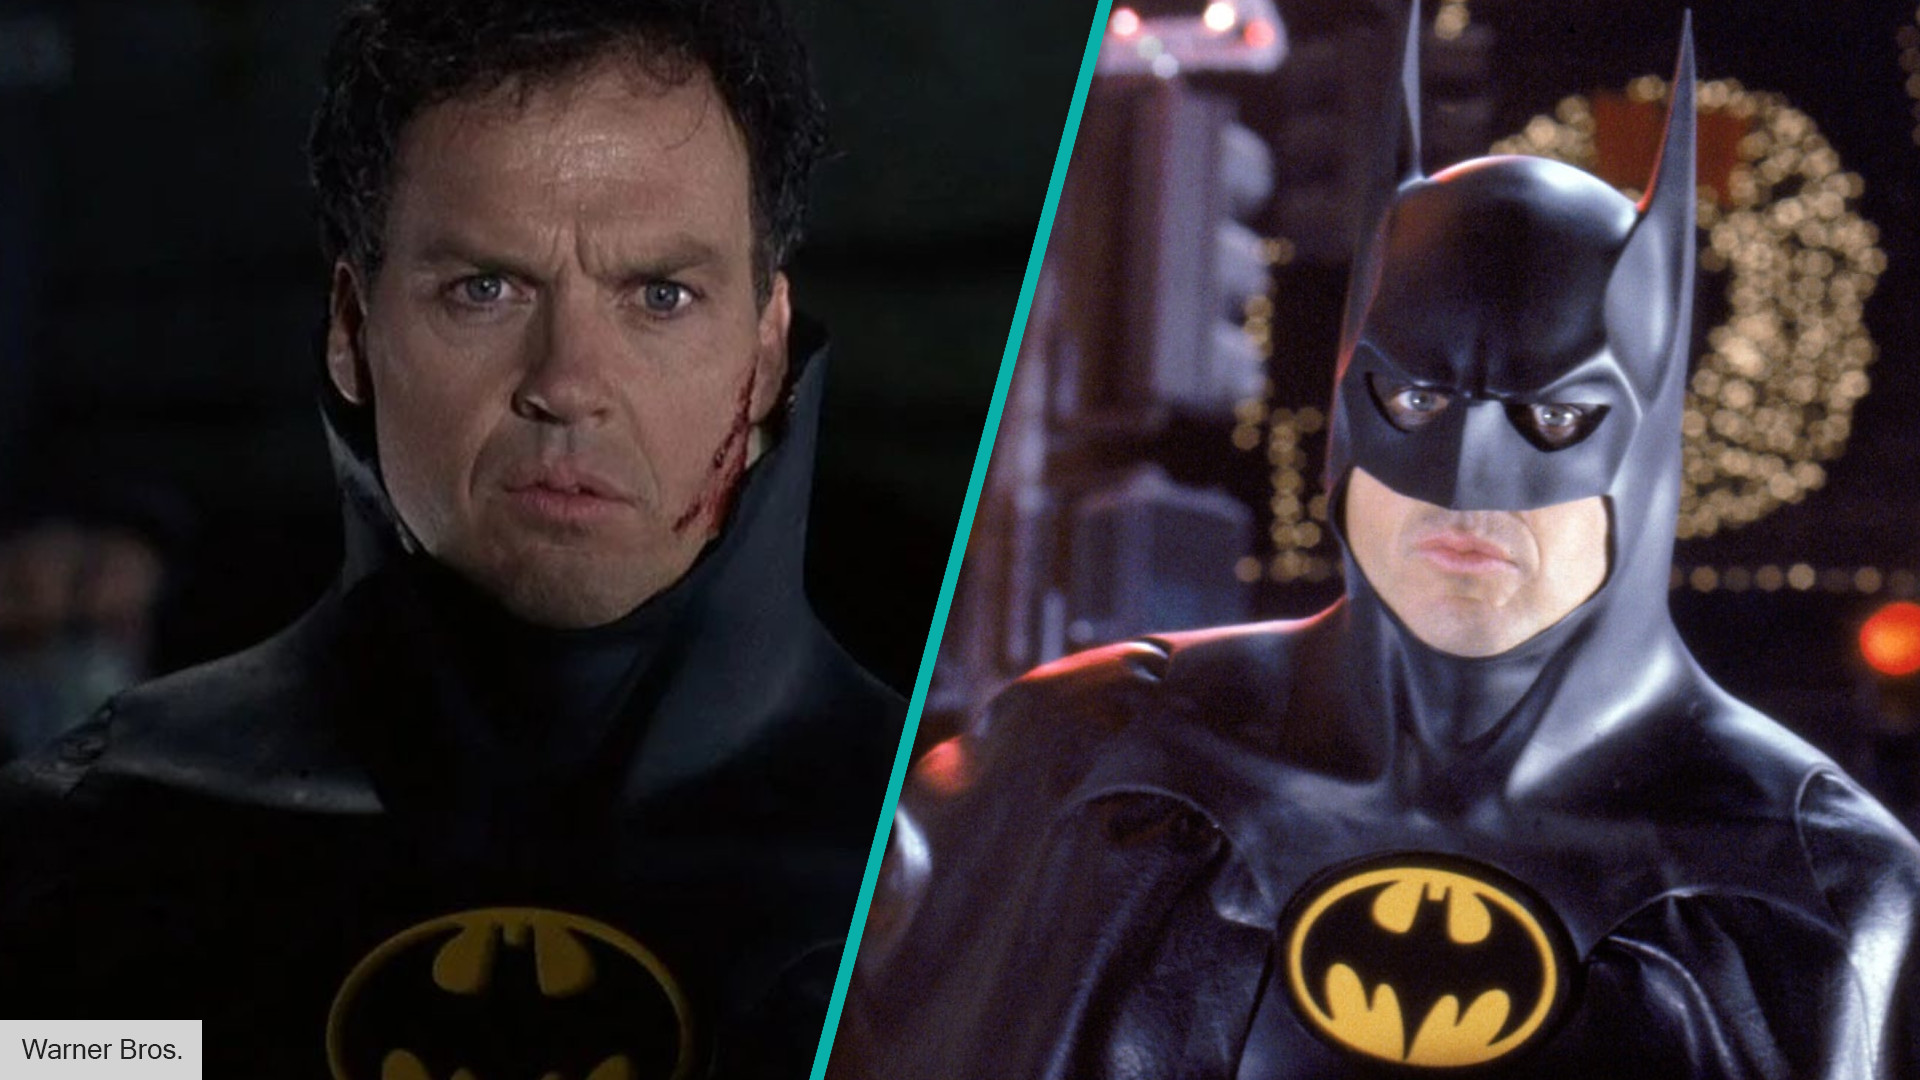 Michael Keaton is the best Batman, and one scene proves it | The Digital Fix